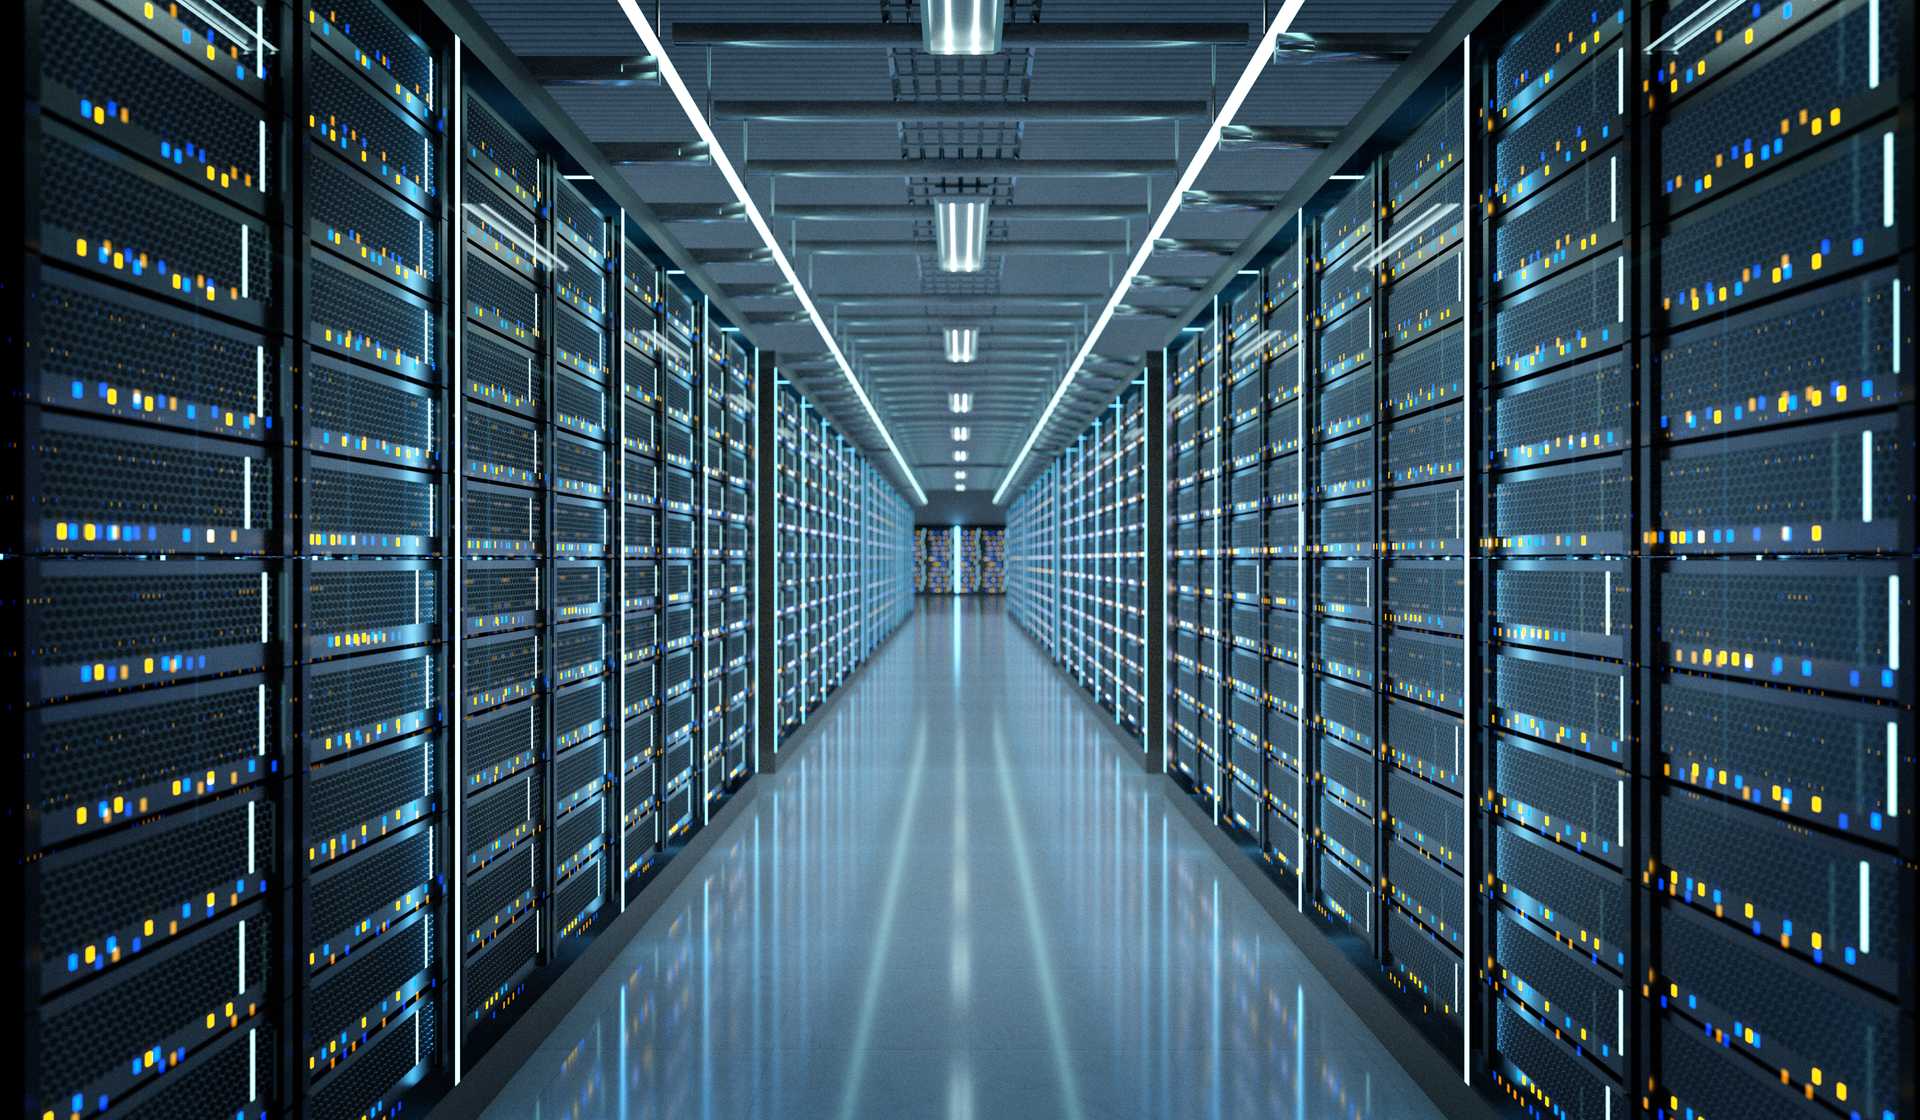 Datacenter representing computing power